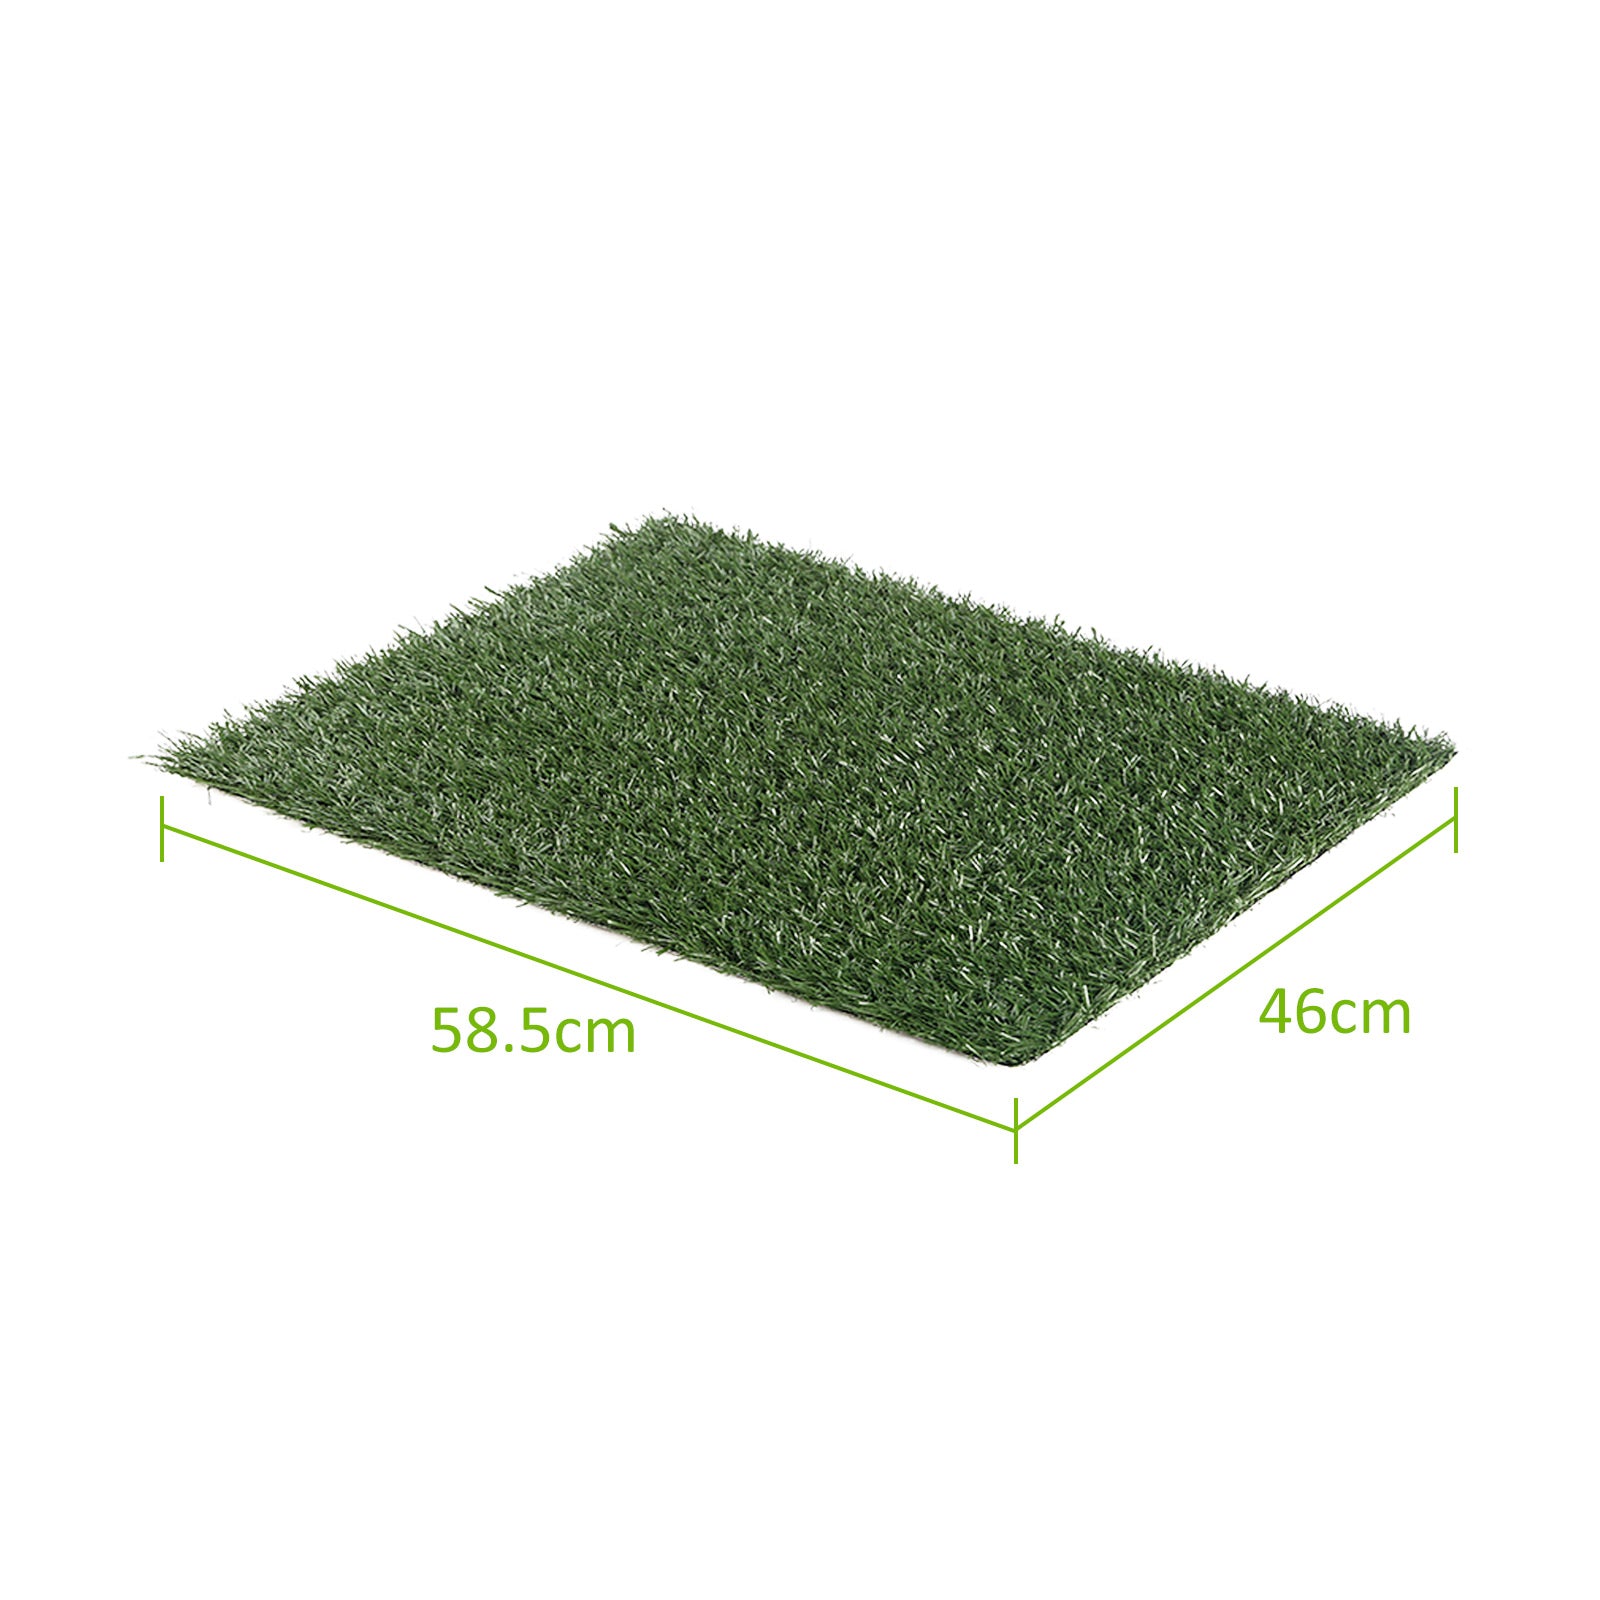 1 Grass Mat for Pet Dog Potty Tray Training Toilet 58.5cm x 46cm - image6